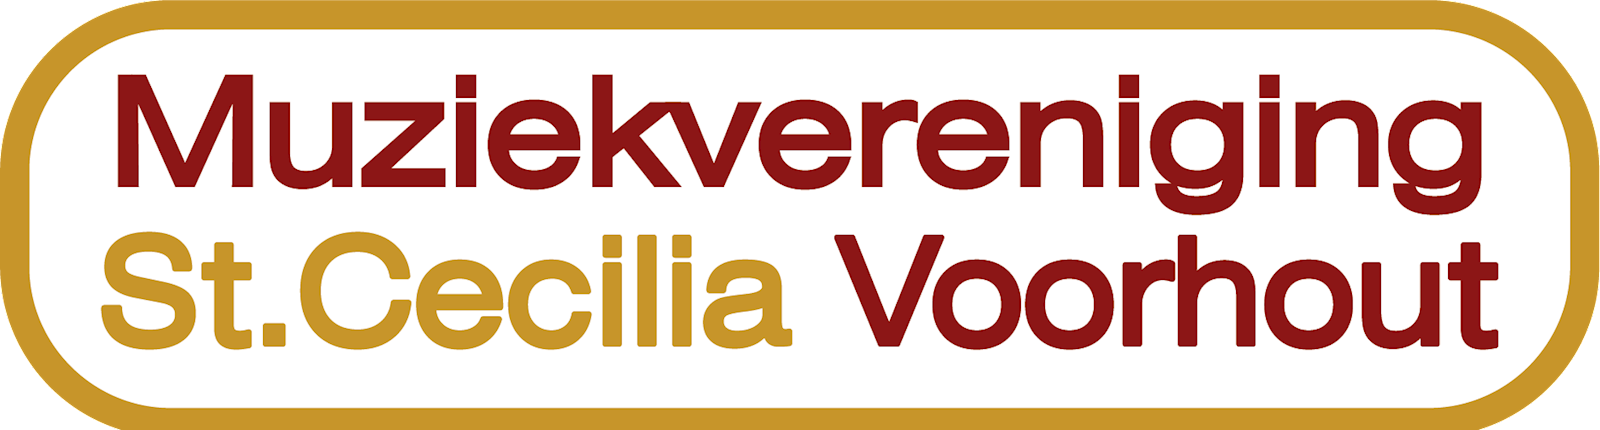 Logo Muziekvereniging St. Cecilia Voorhout